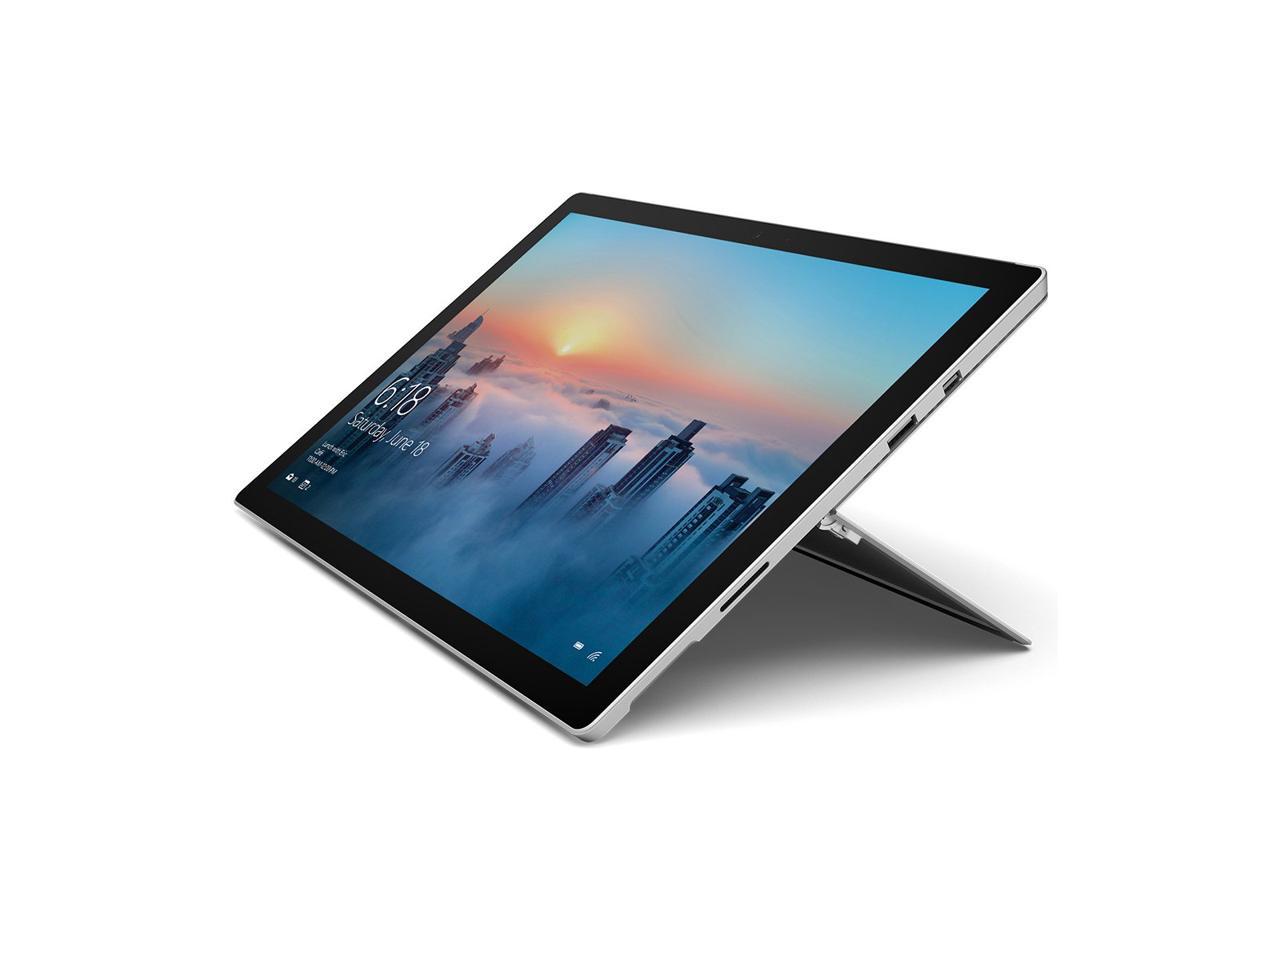 Microsoft Surface Pro 4 1724, Core I5 6300U, 2.4GHz, 8GB DDR3